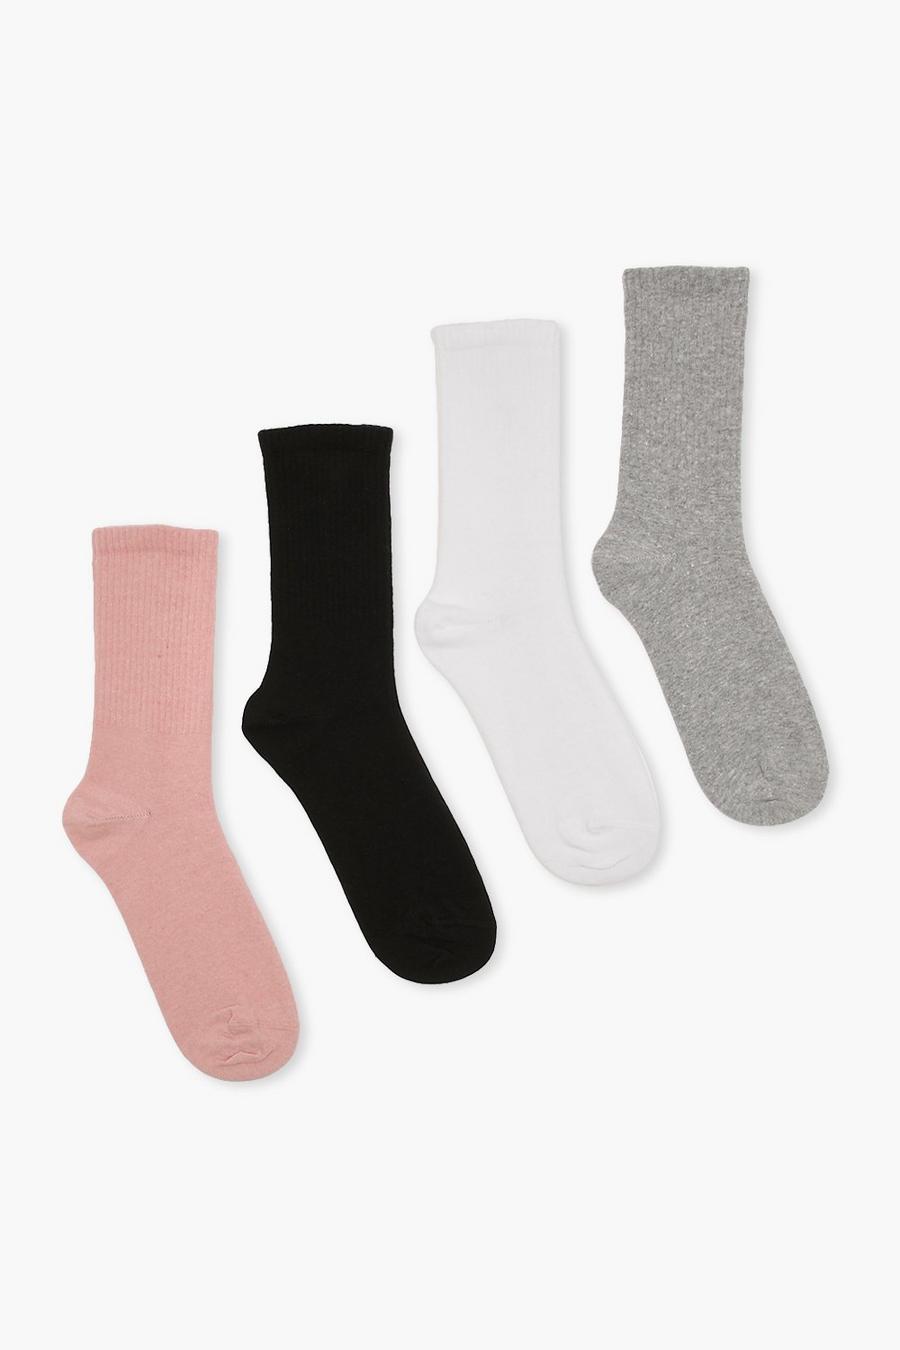 Multi Coloured Sports Socks 4 Pack